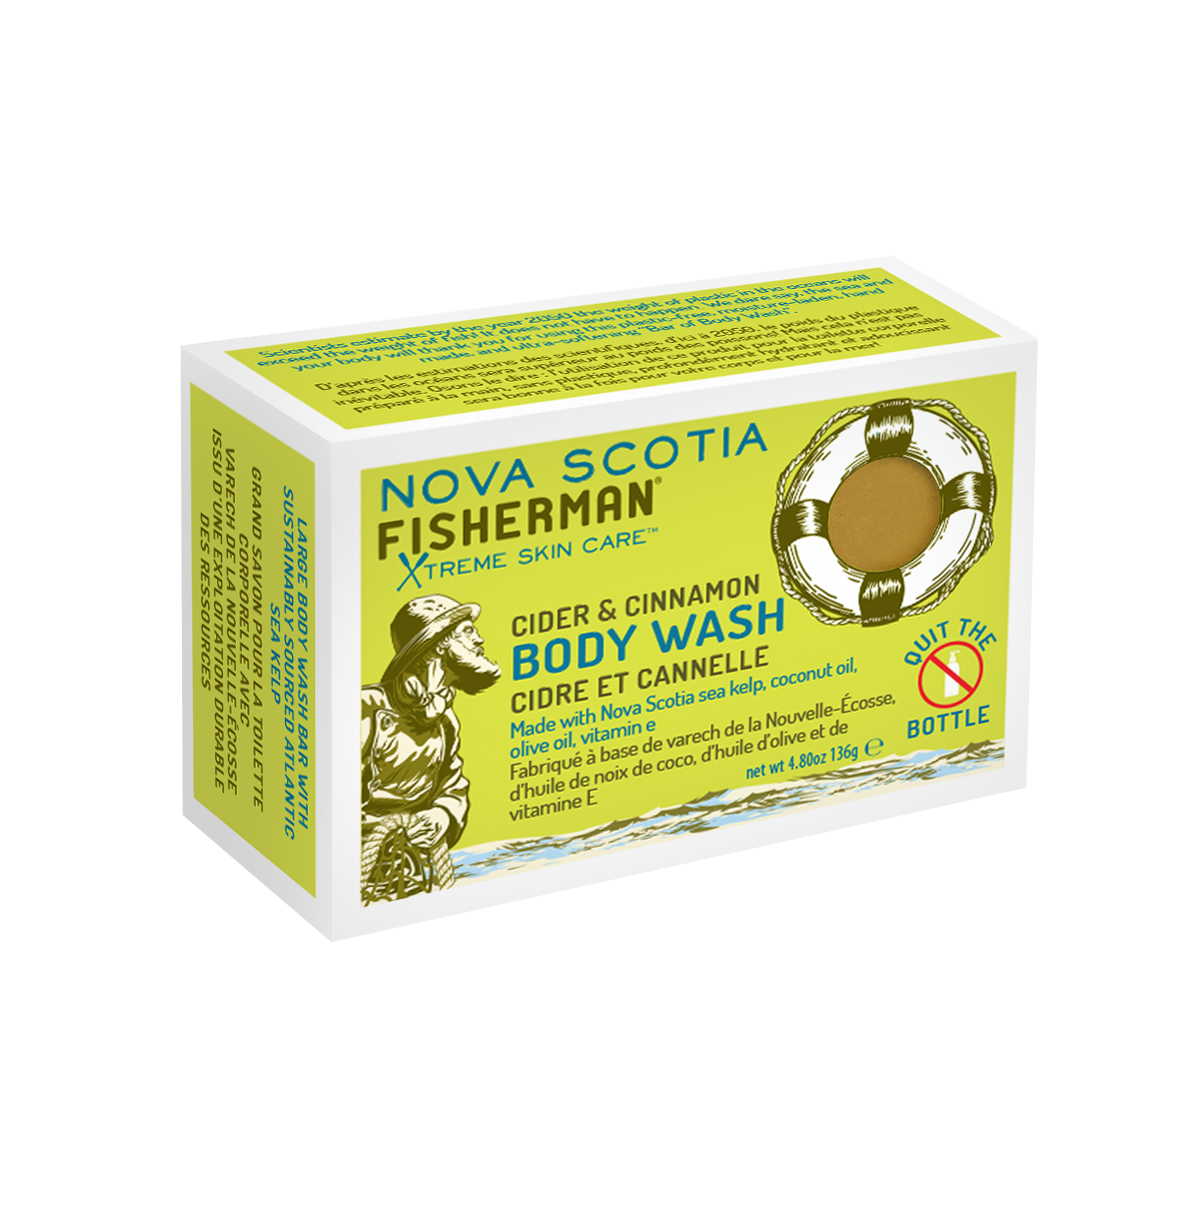 Nova Scotia Fisherman - Cider & Cinnamon Body Wash Bar Soap